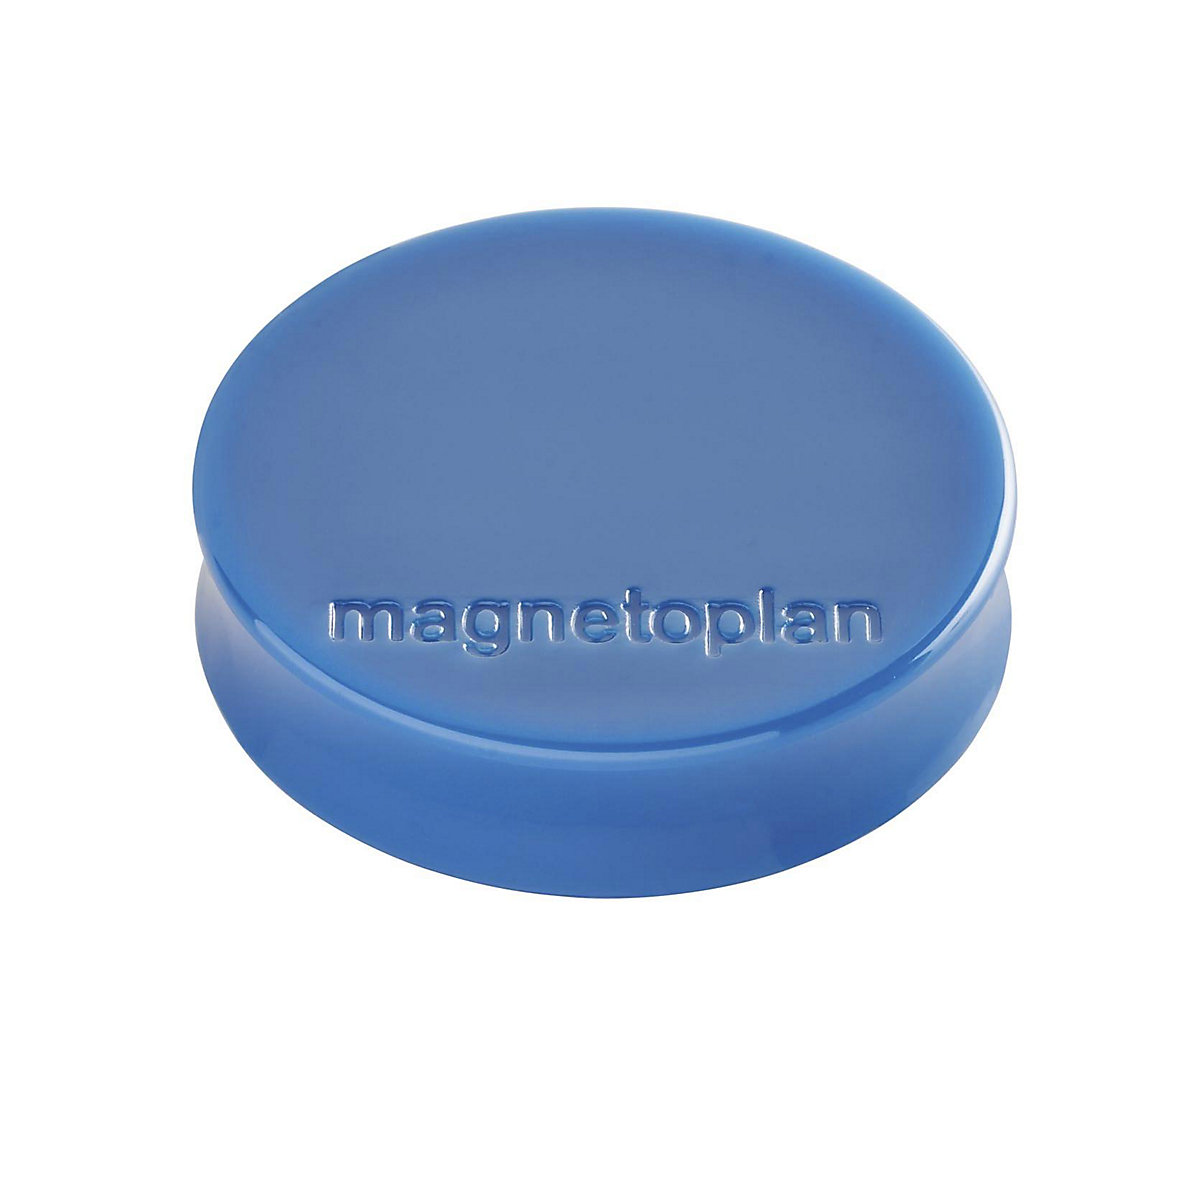 Ergo-Magnet magnetoplan, Ø 30 mm, VE 60 Stk, dunkelblau-4